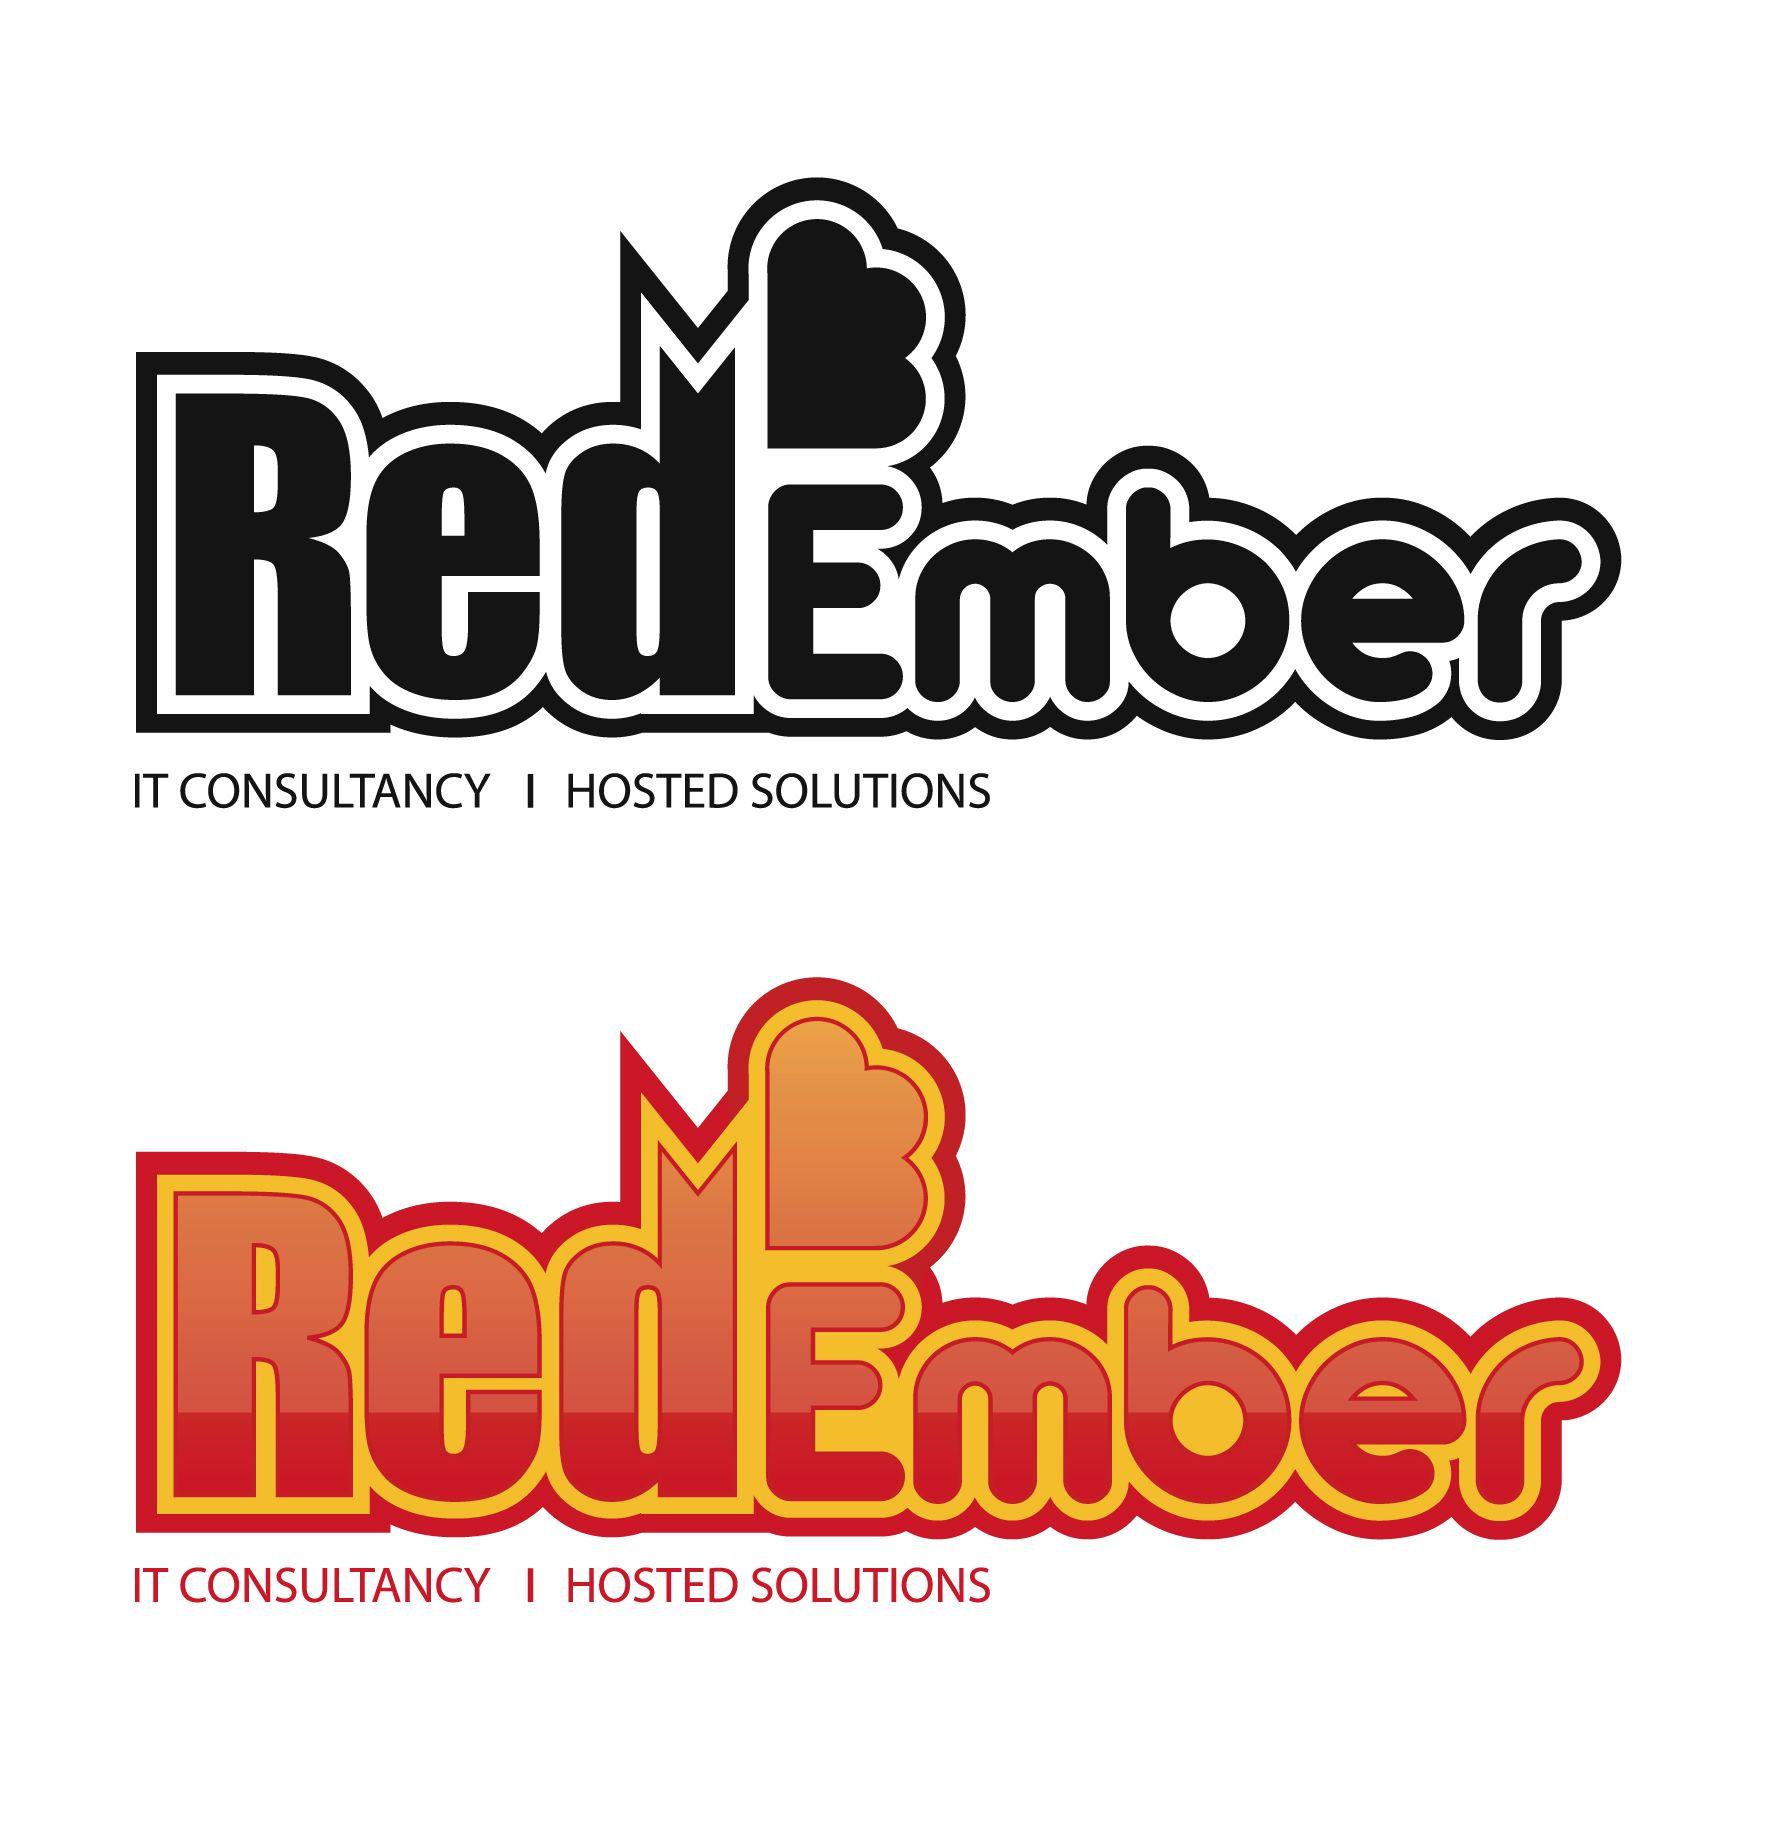 Red Ember Logo - Modern, Professional Logo Design for RED EMBER by Wouter V | Design ...